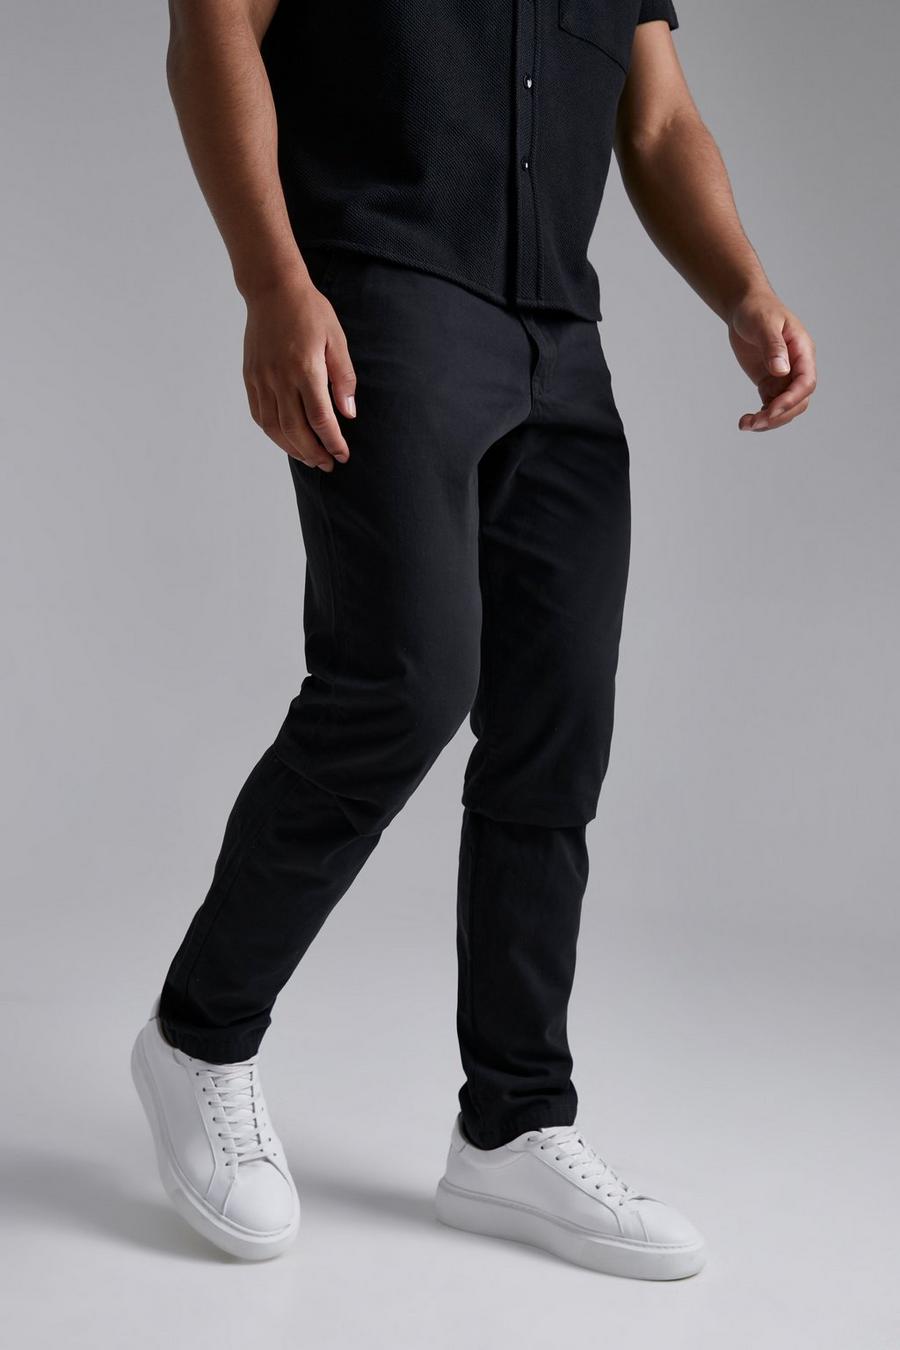 Pantaloni Chino Tall Slim Fit, Black nero